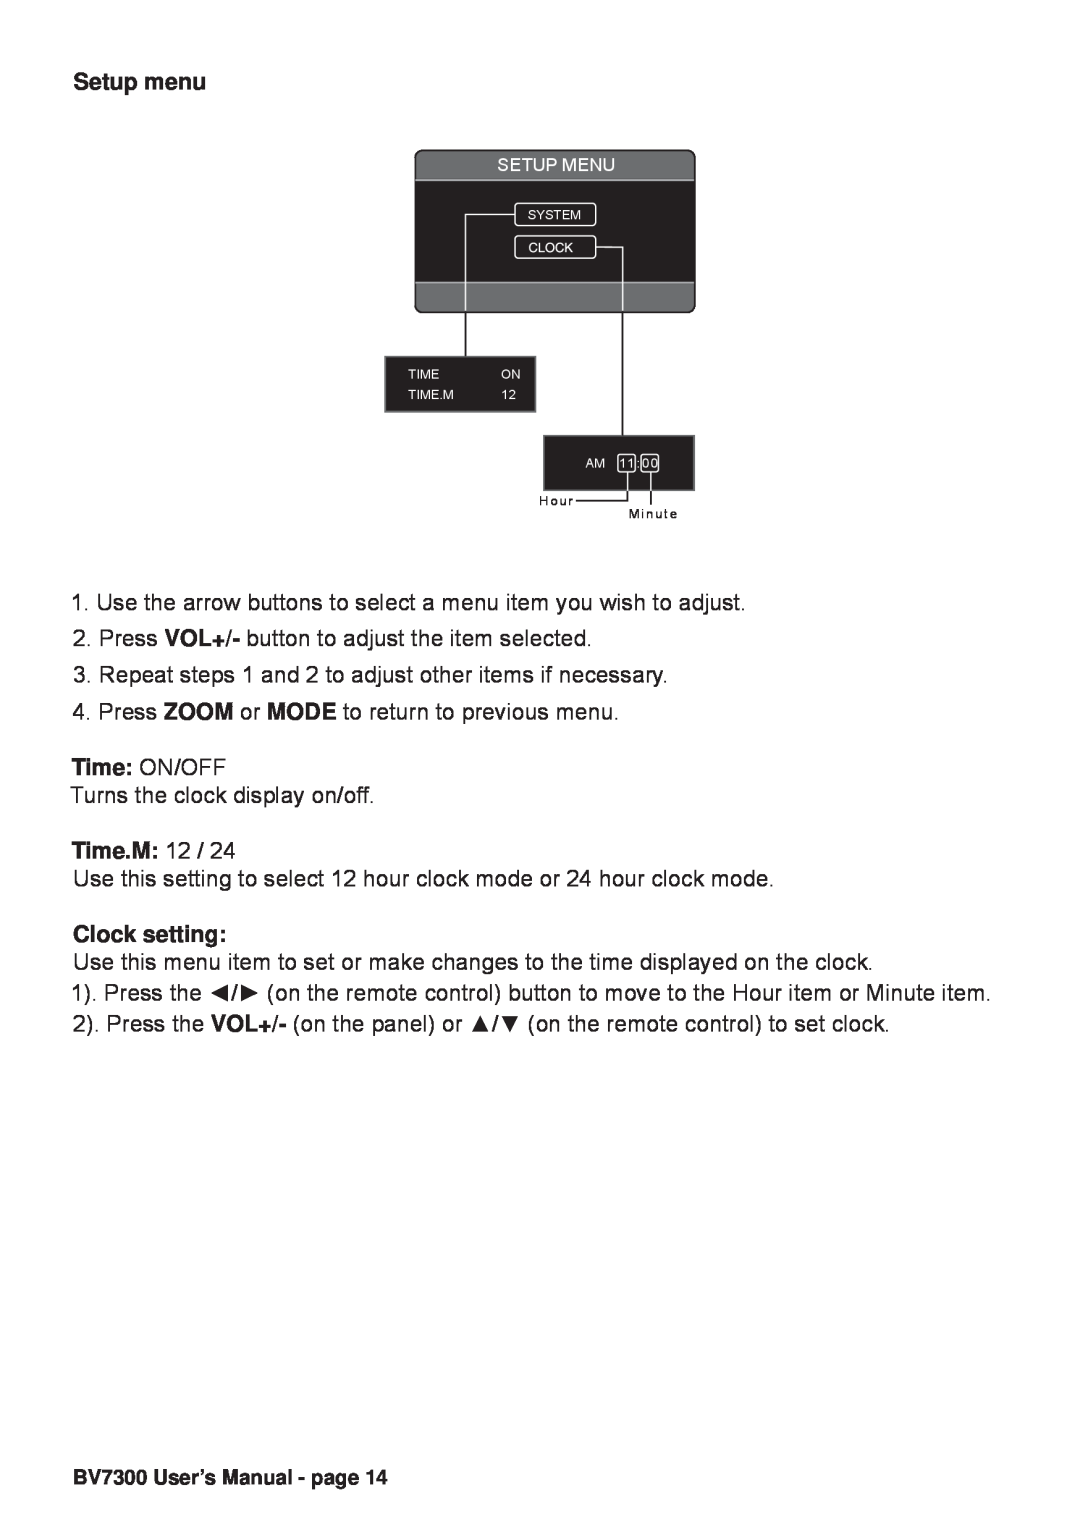 Boss Audio Systems BV7300 manual Setup menu, Time ON/OFF, Time.M, Clock setting 